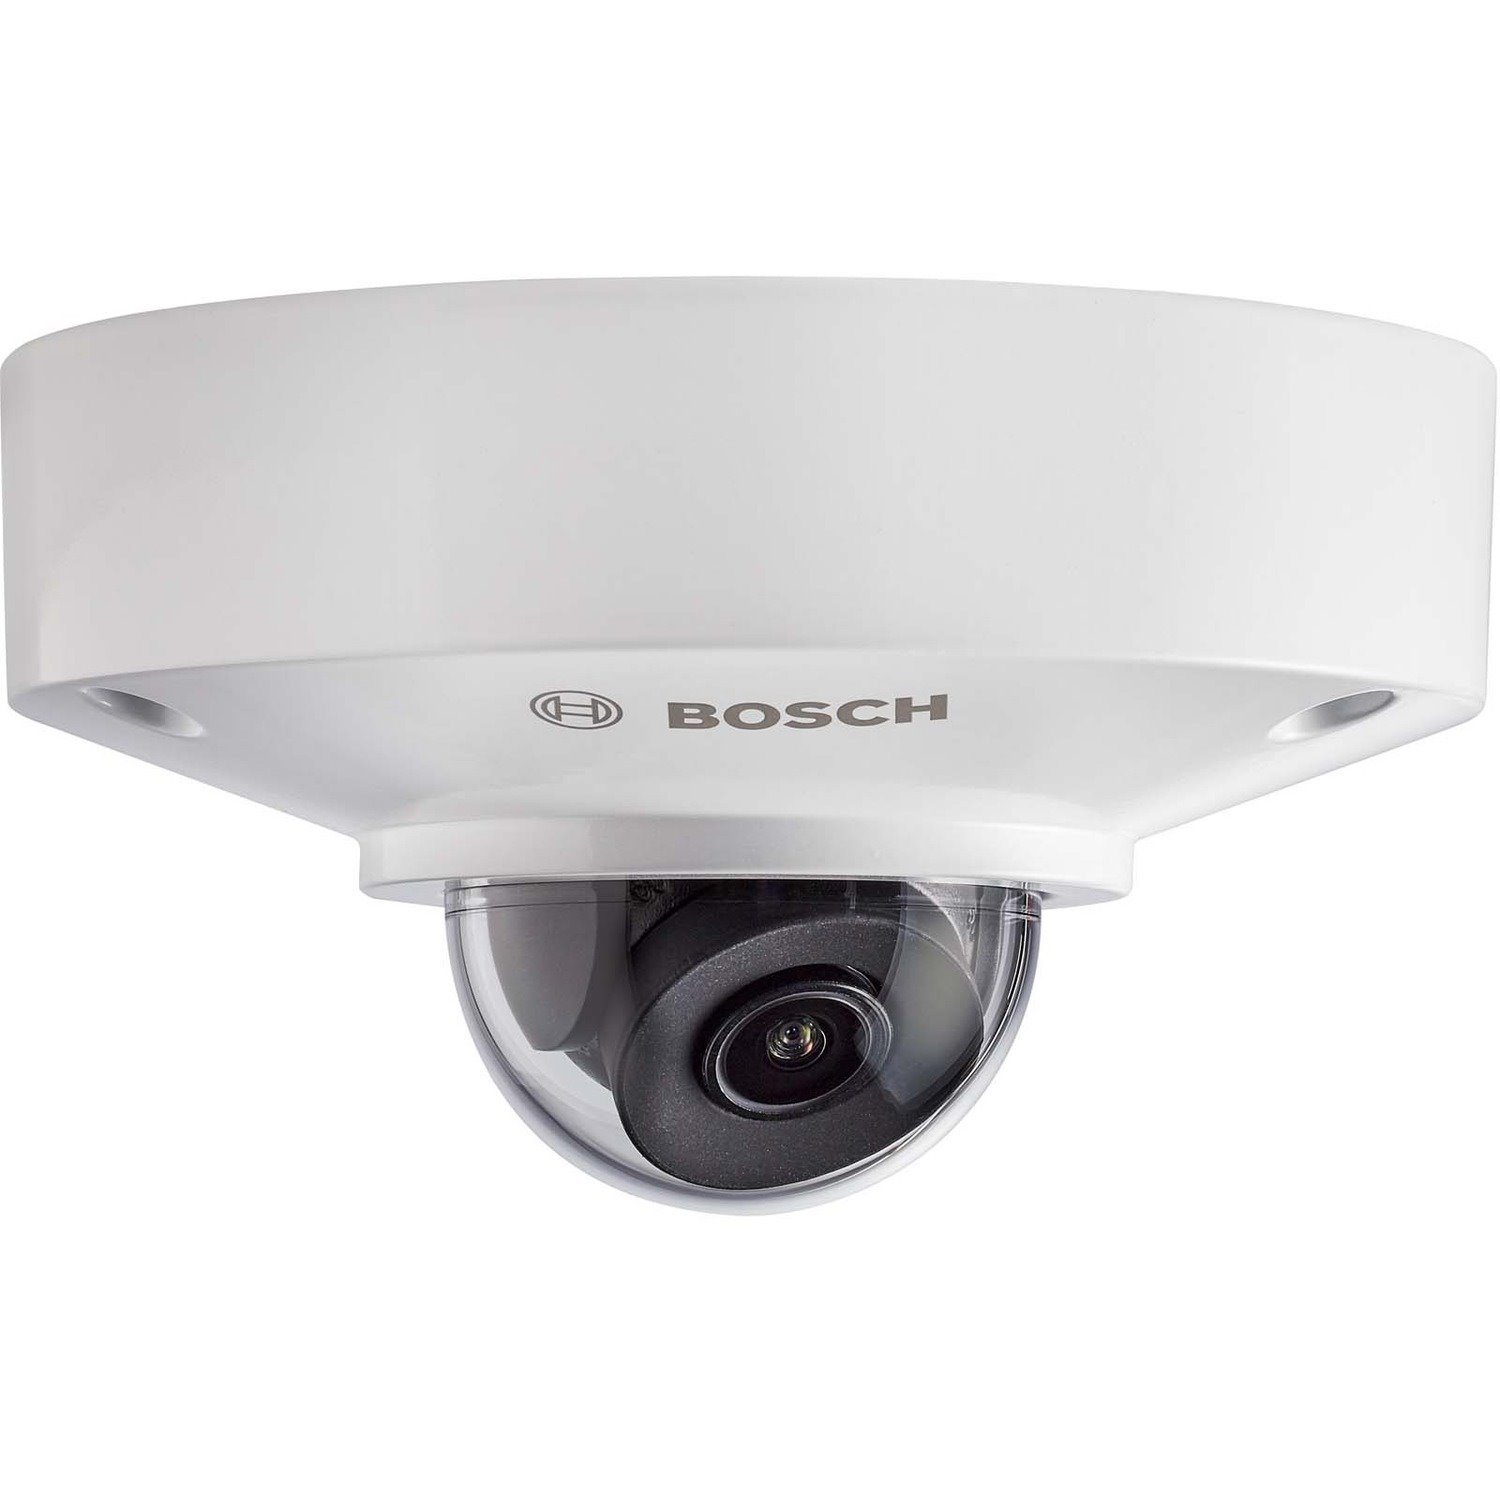 Bosch FLEXIDOME IP 5.3 Megapixel HD Network Camera - Micro Dome - TAA Compliant